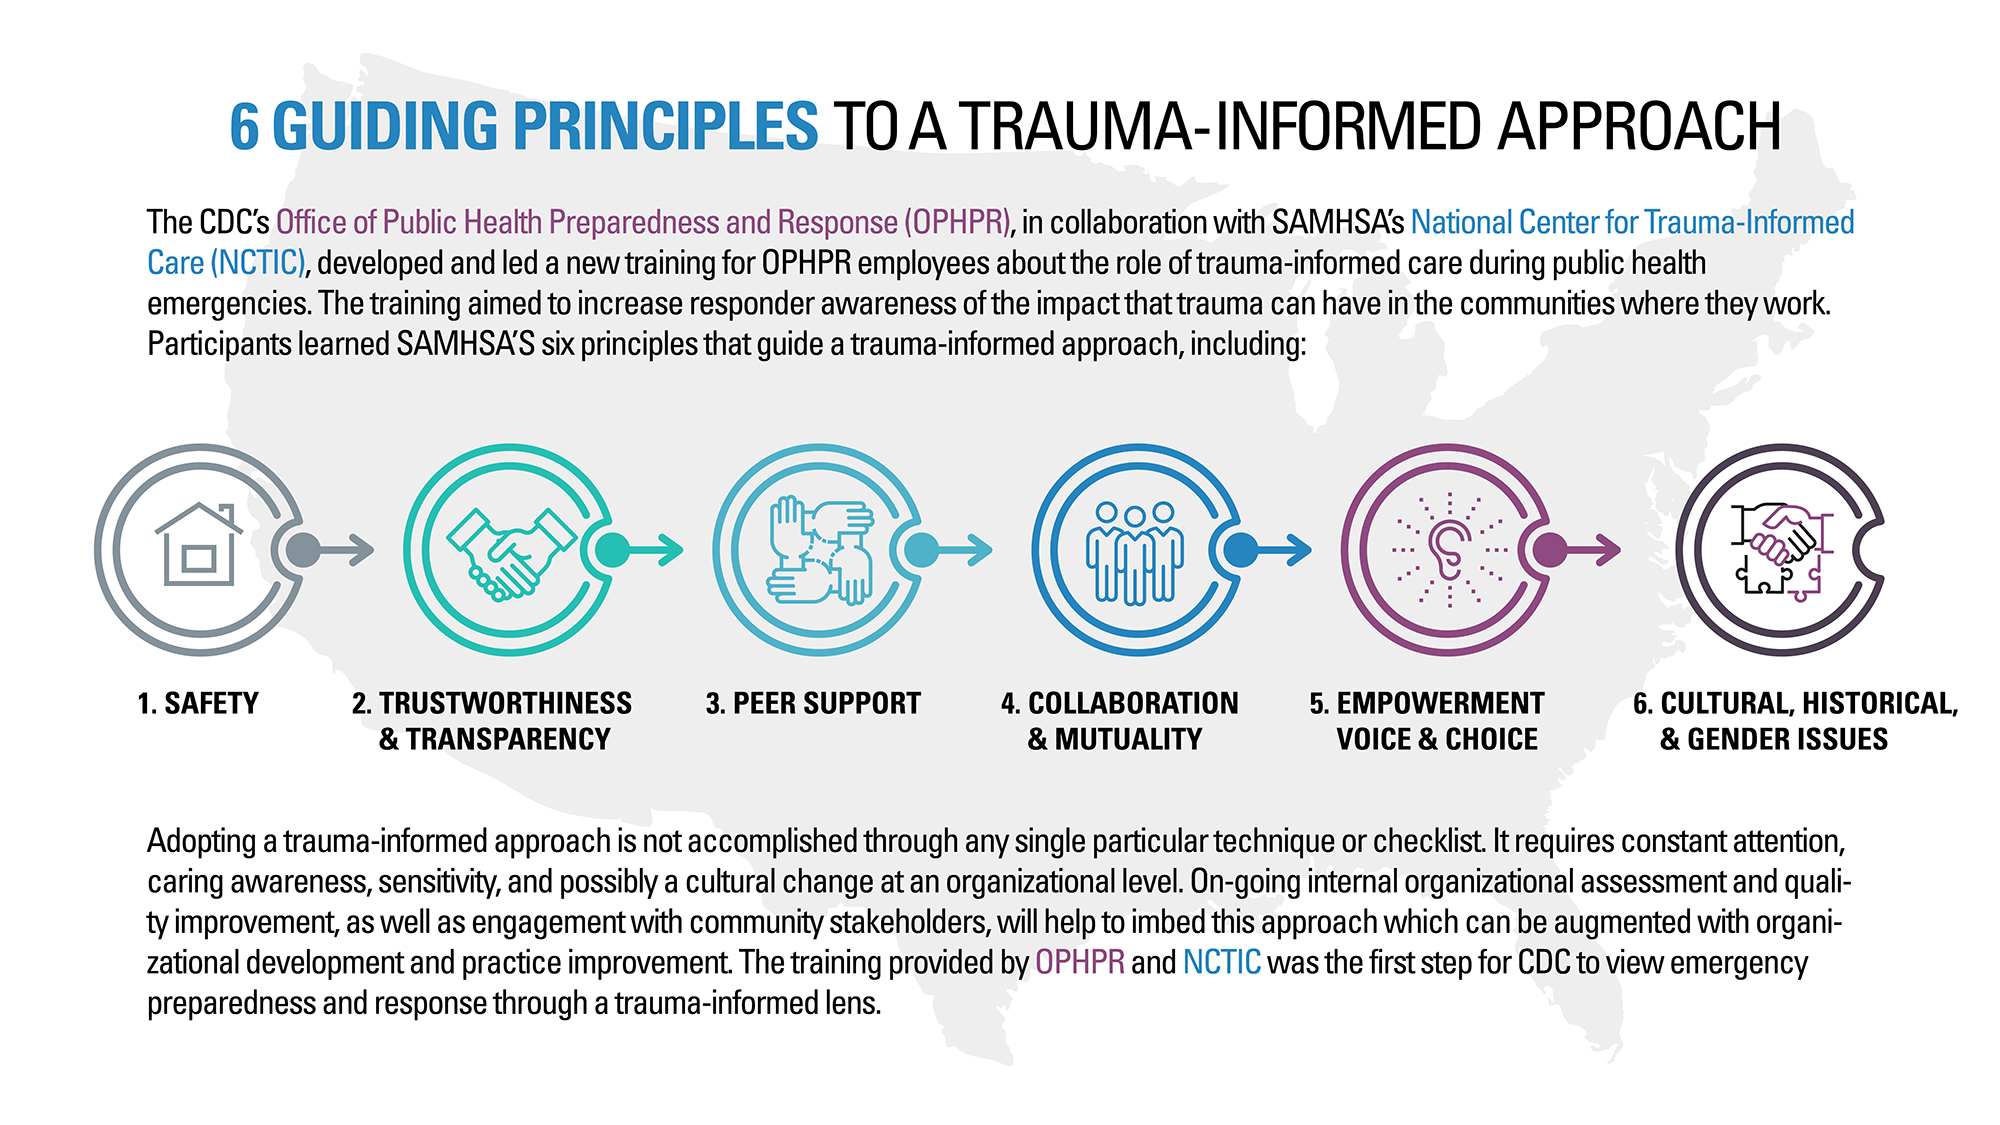 6 Guiding Principles to a Trauma-Informed Approach